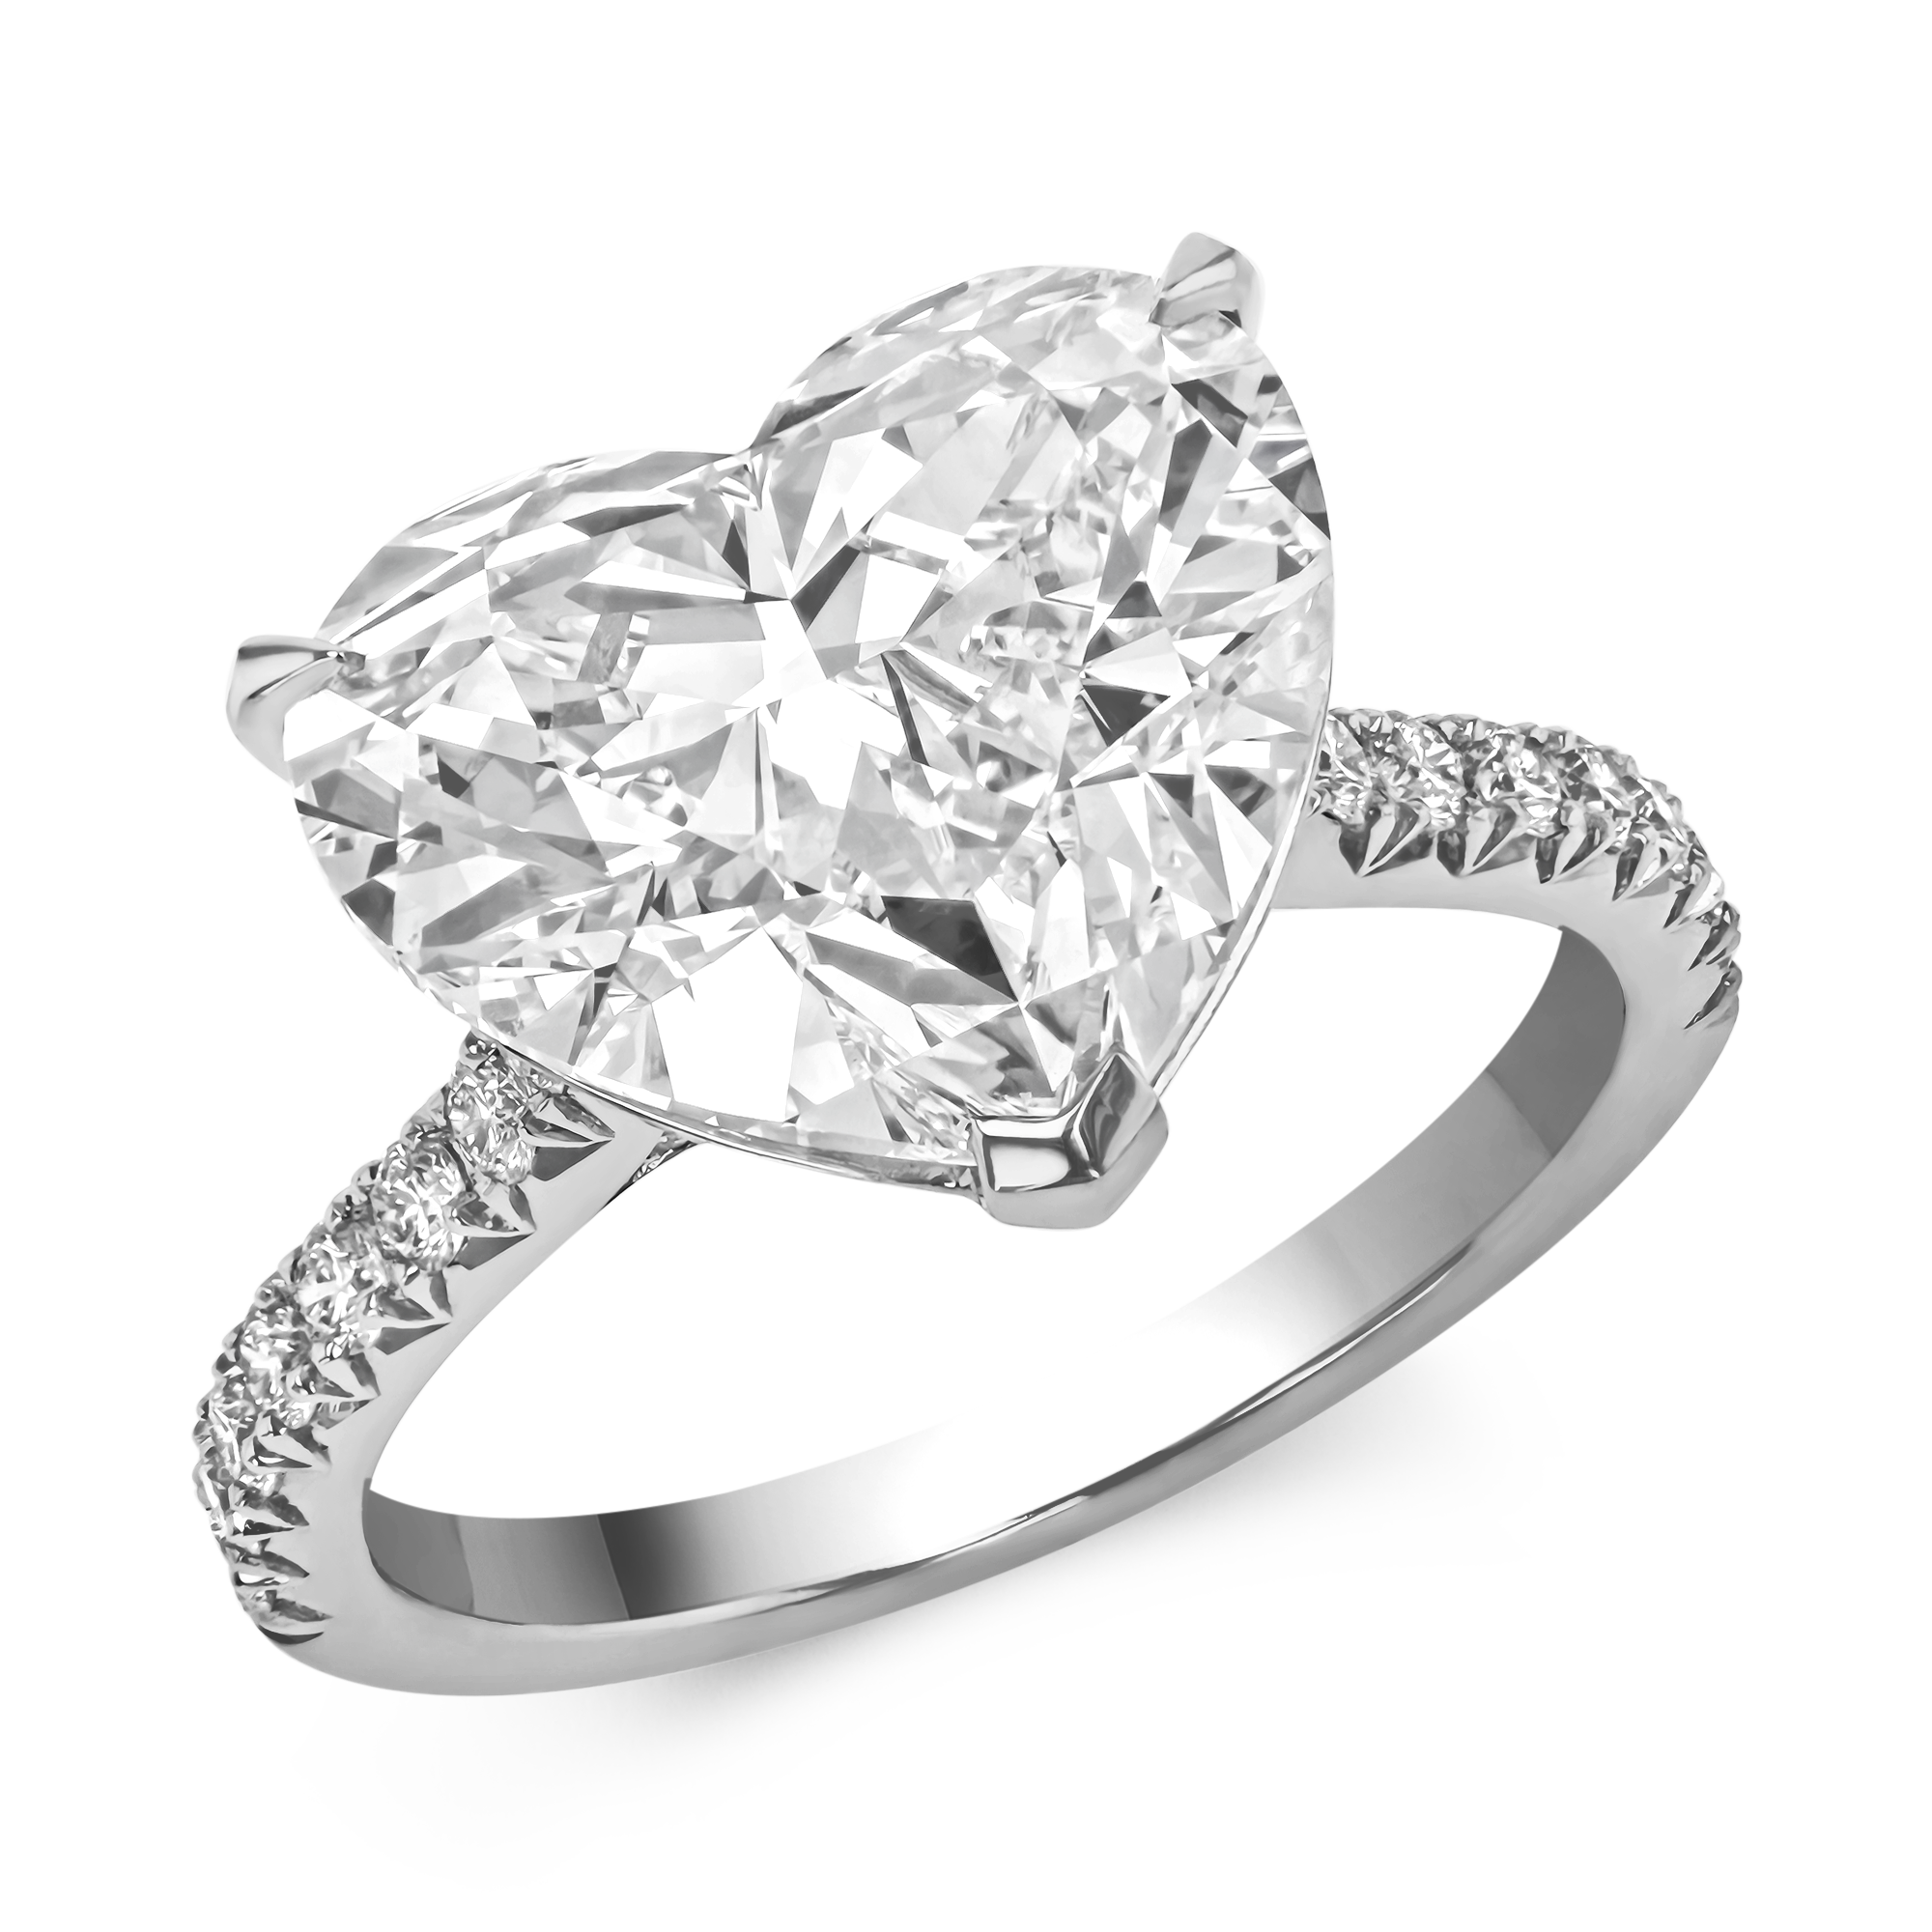 Masterpiece Aurora Setting Colourless Heart Diamond Ring with Diamond Set Shoulders Heart Cut, Claw Set_1